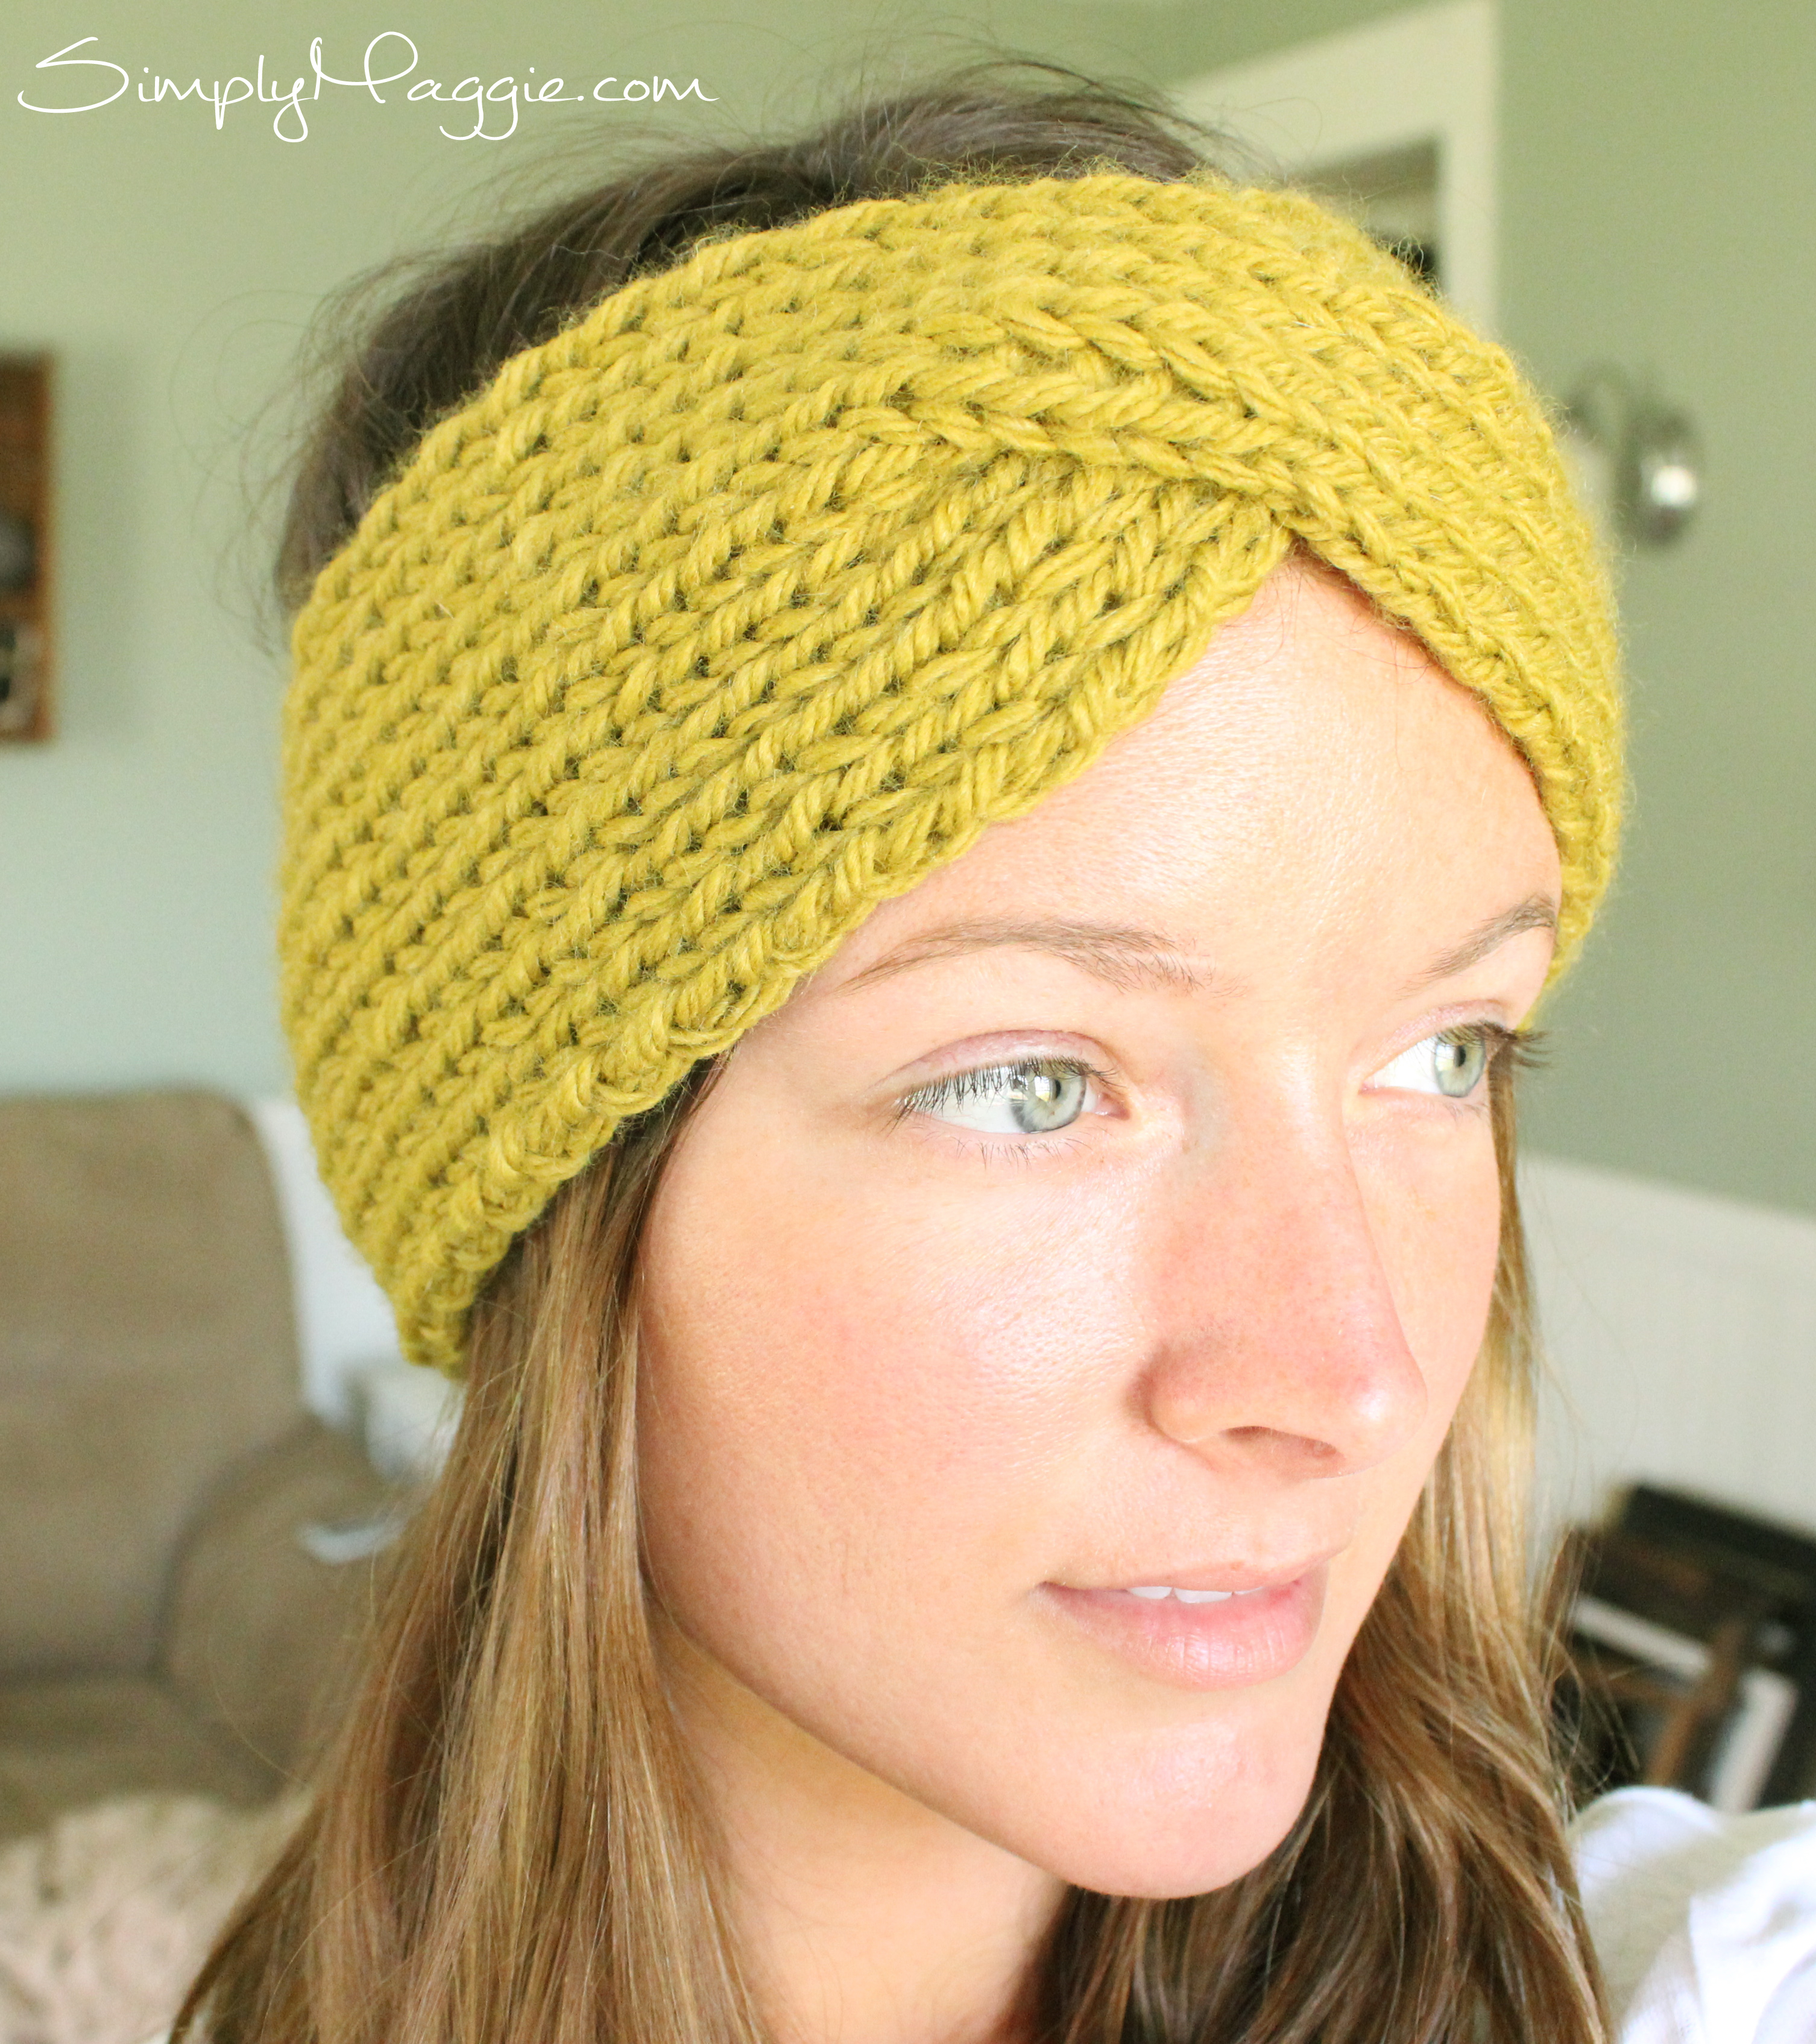 Knitting Patterns Headbands Turban Style Knit Headband Simplymaggie